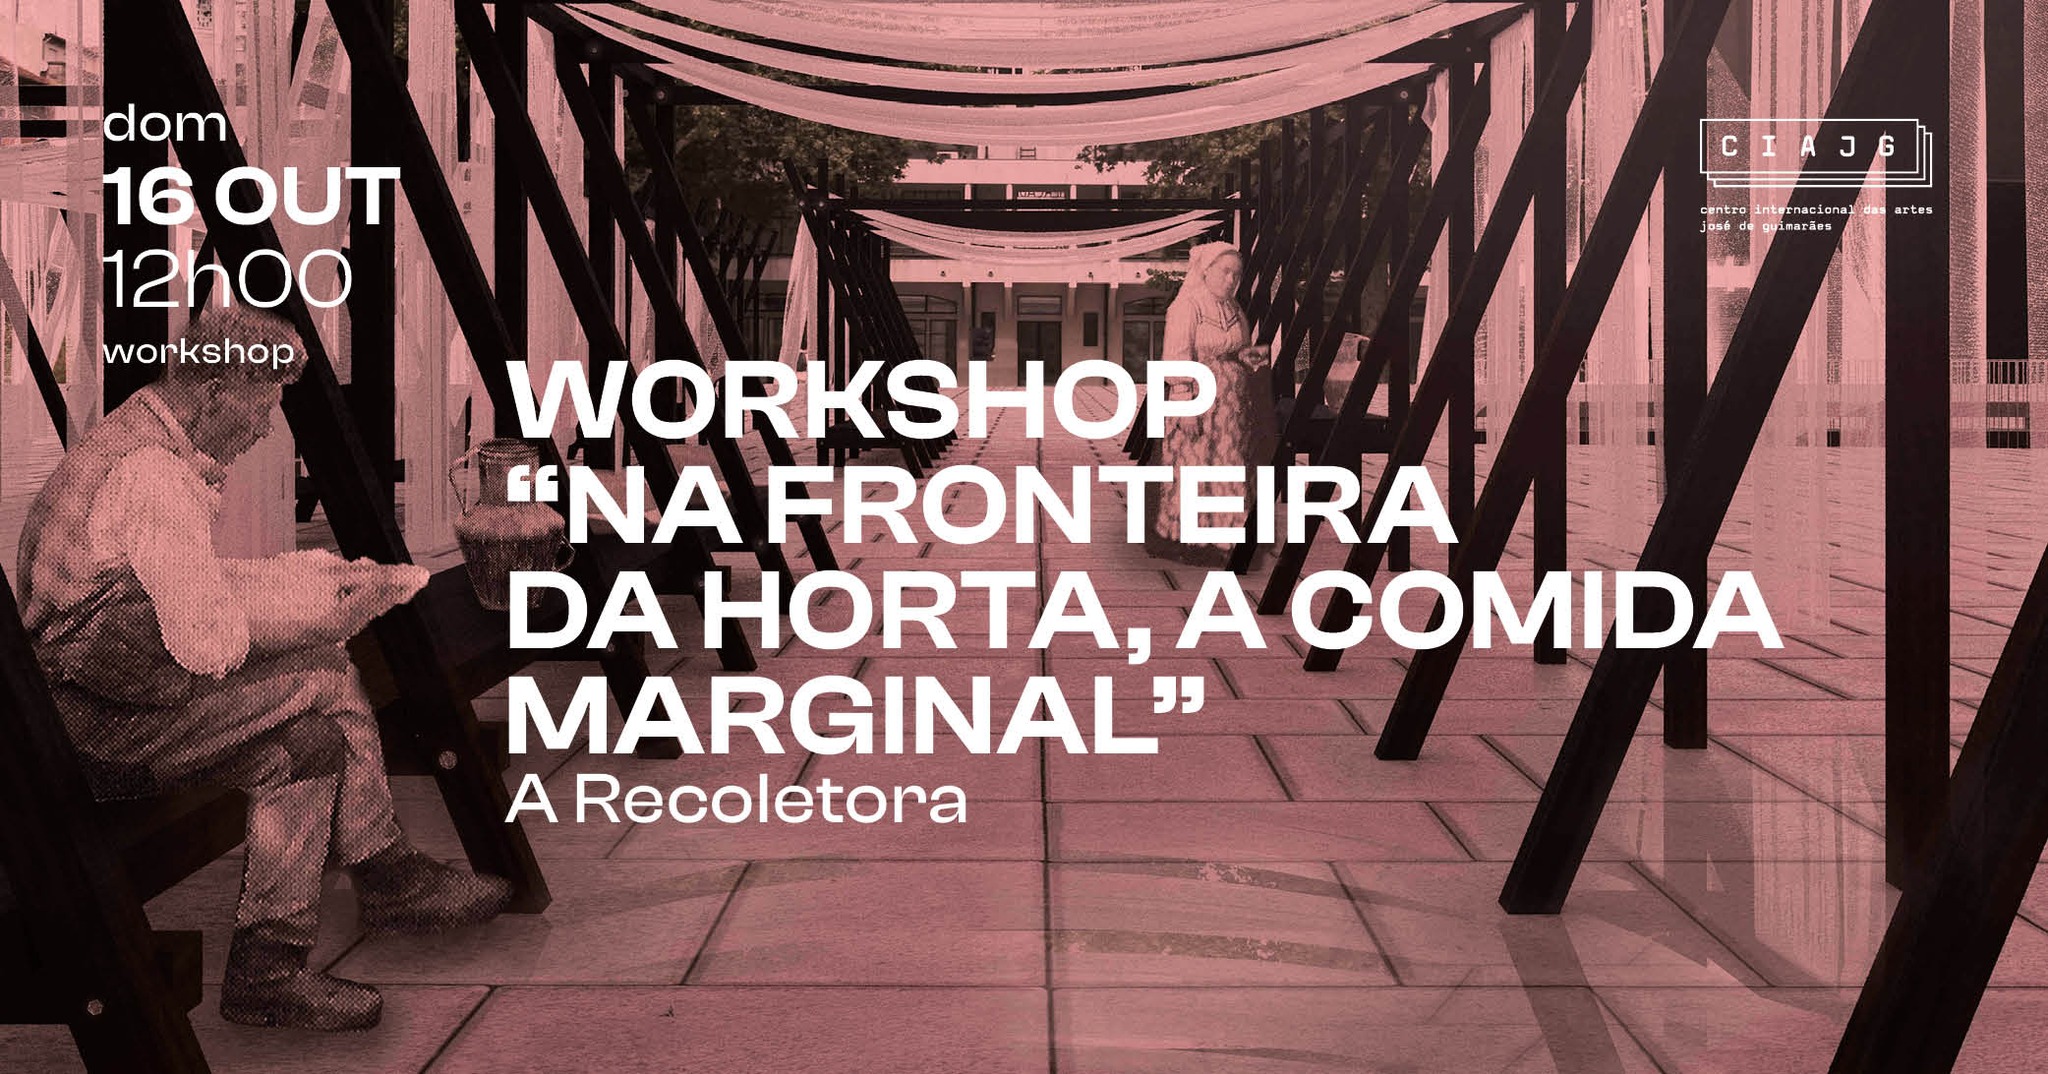 Workshop “Na Fronteira da Horta, a comida marginal”